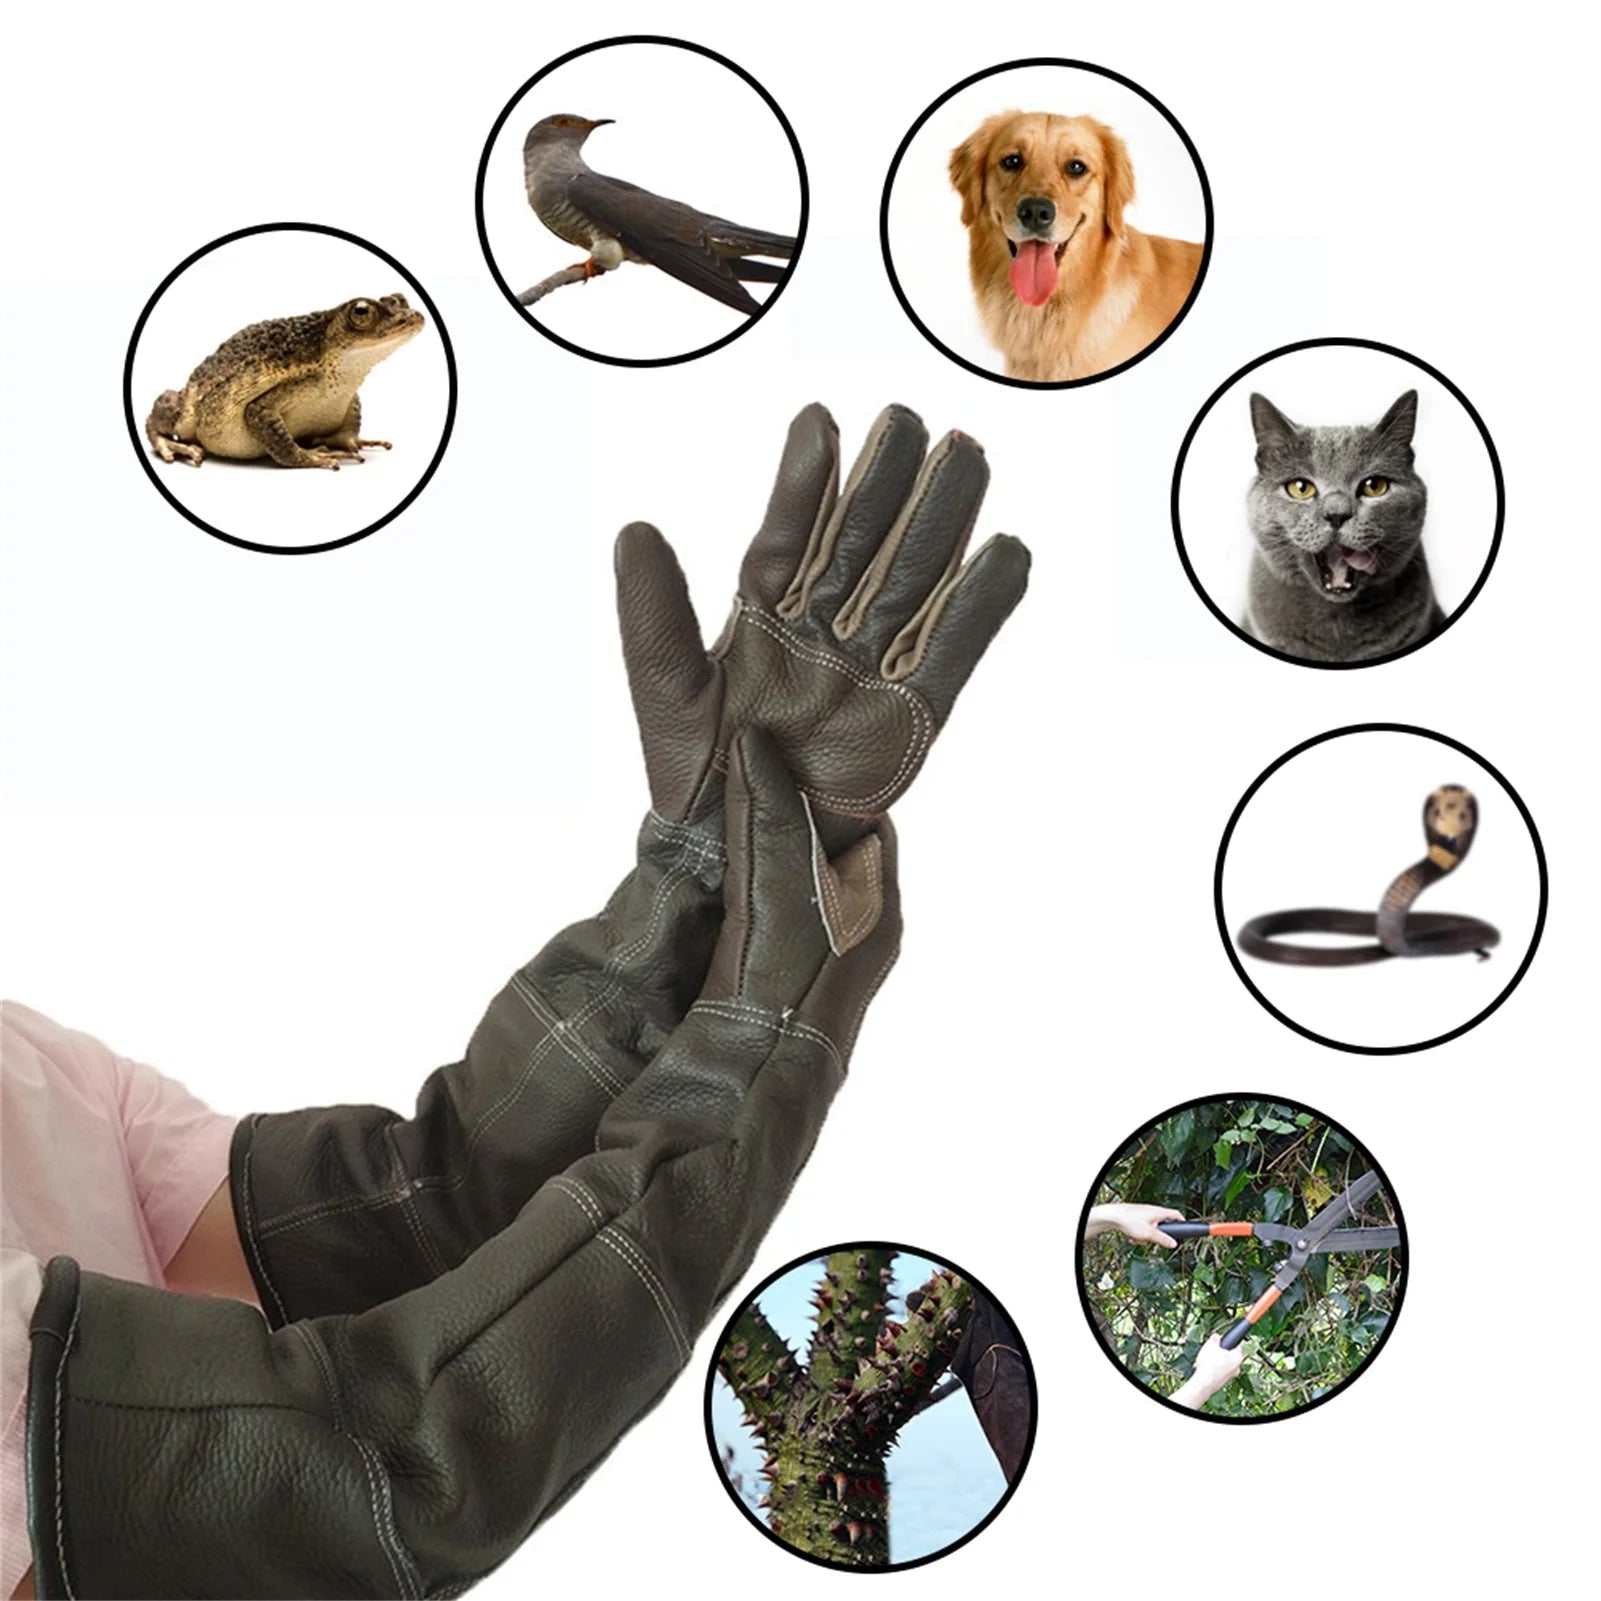 Dog Training Gloves - 1 pair / United States